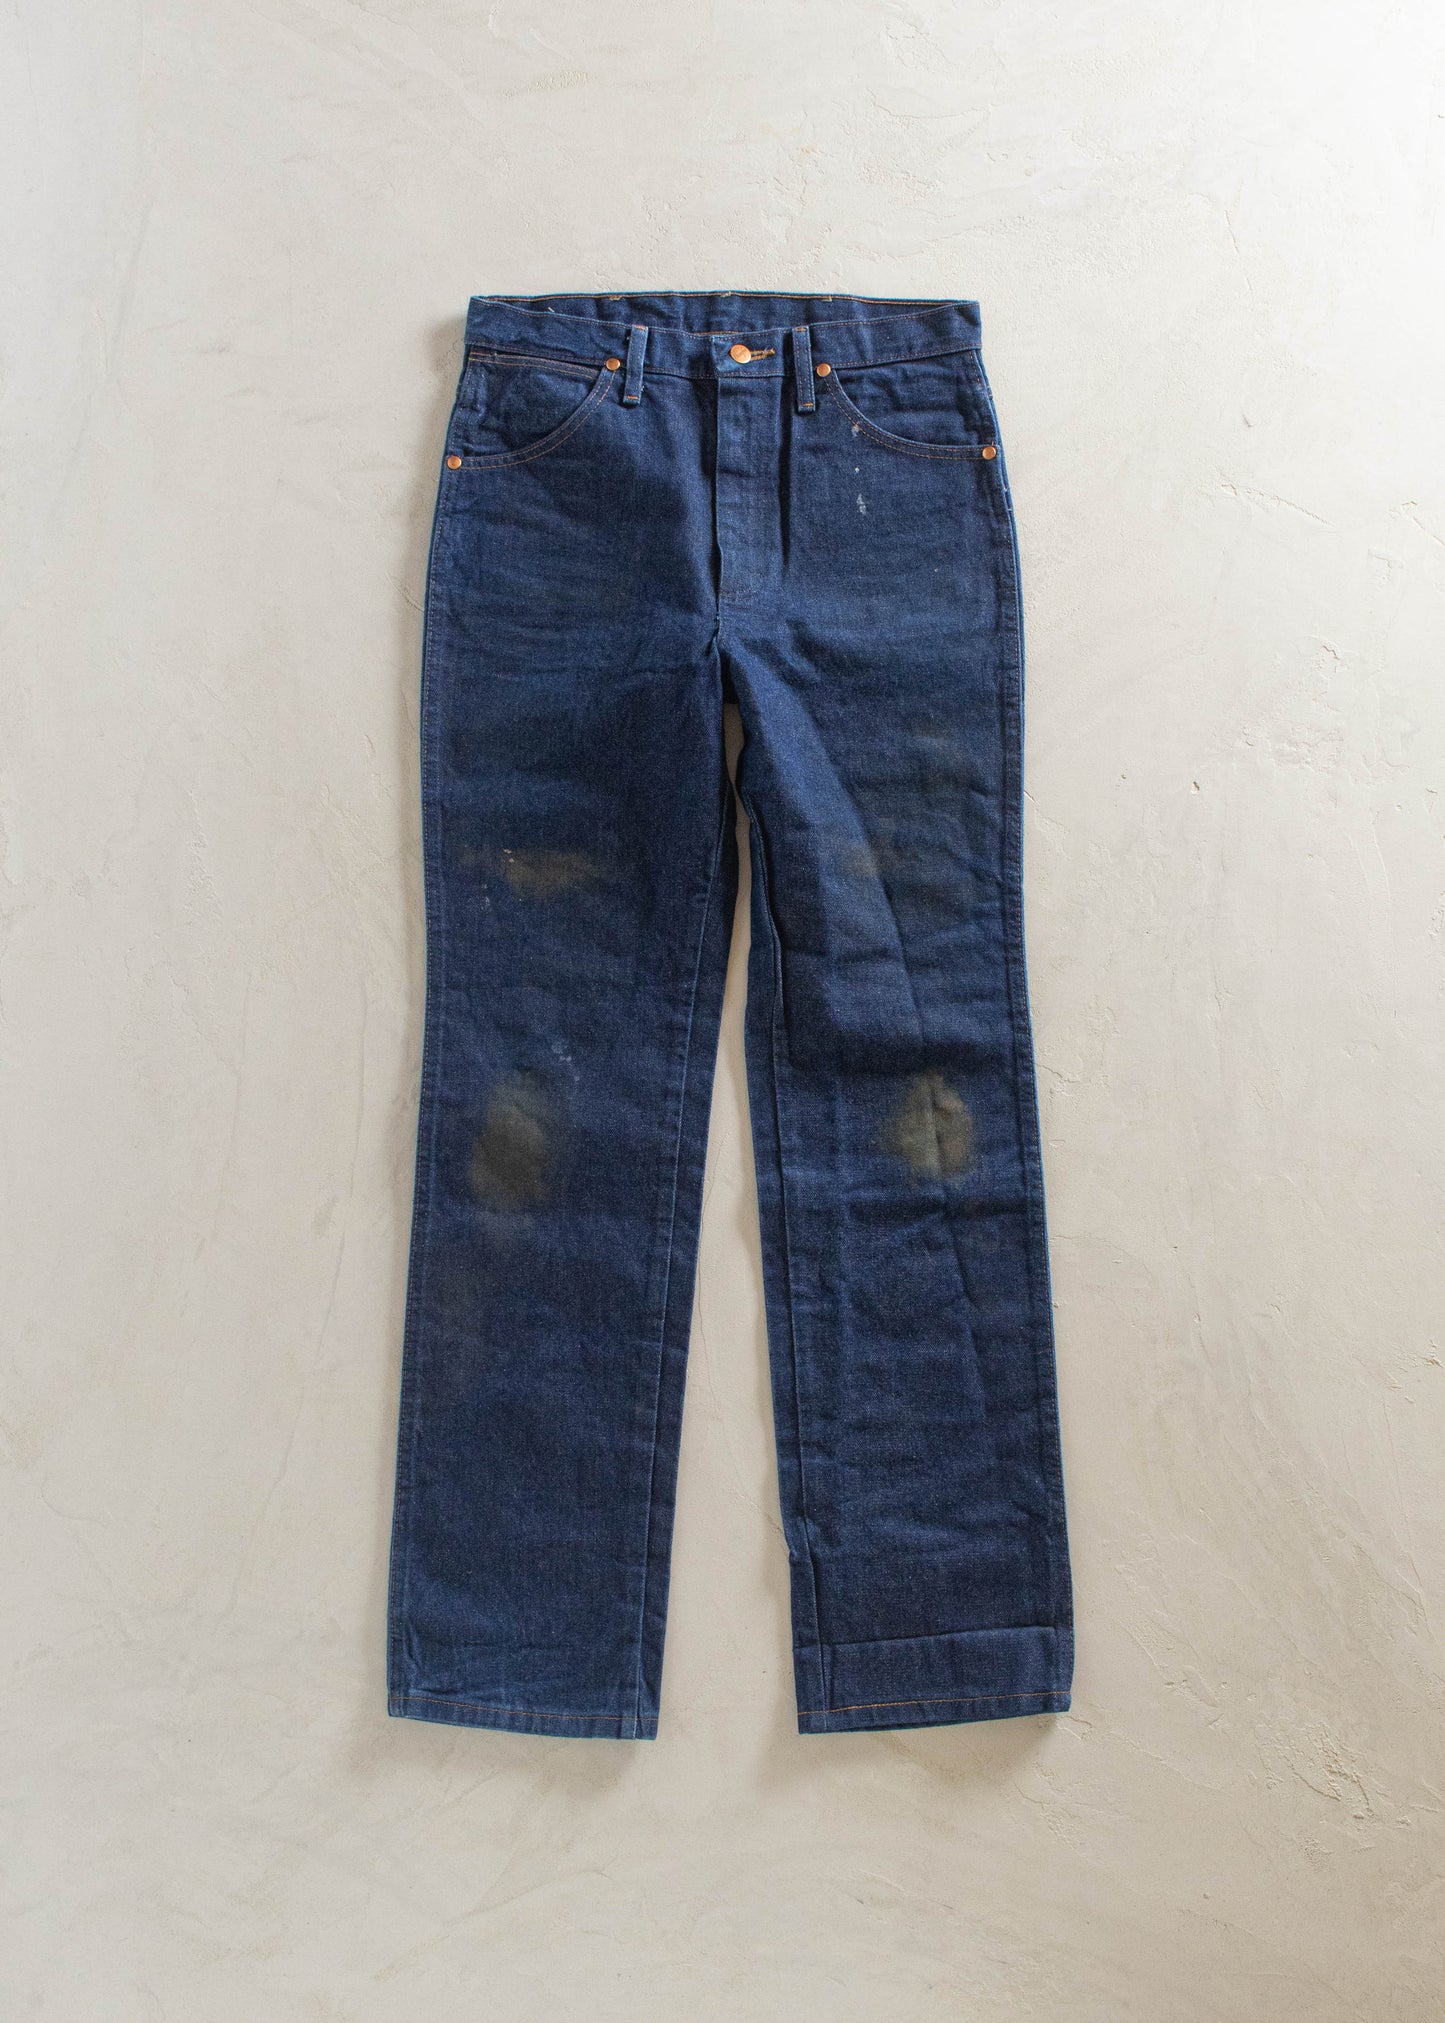 1980s Wrangler Darkwash Jeans Size Women's 27 Men's 30